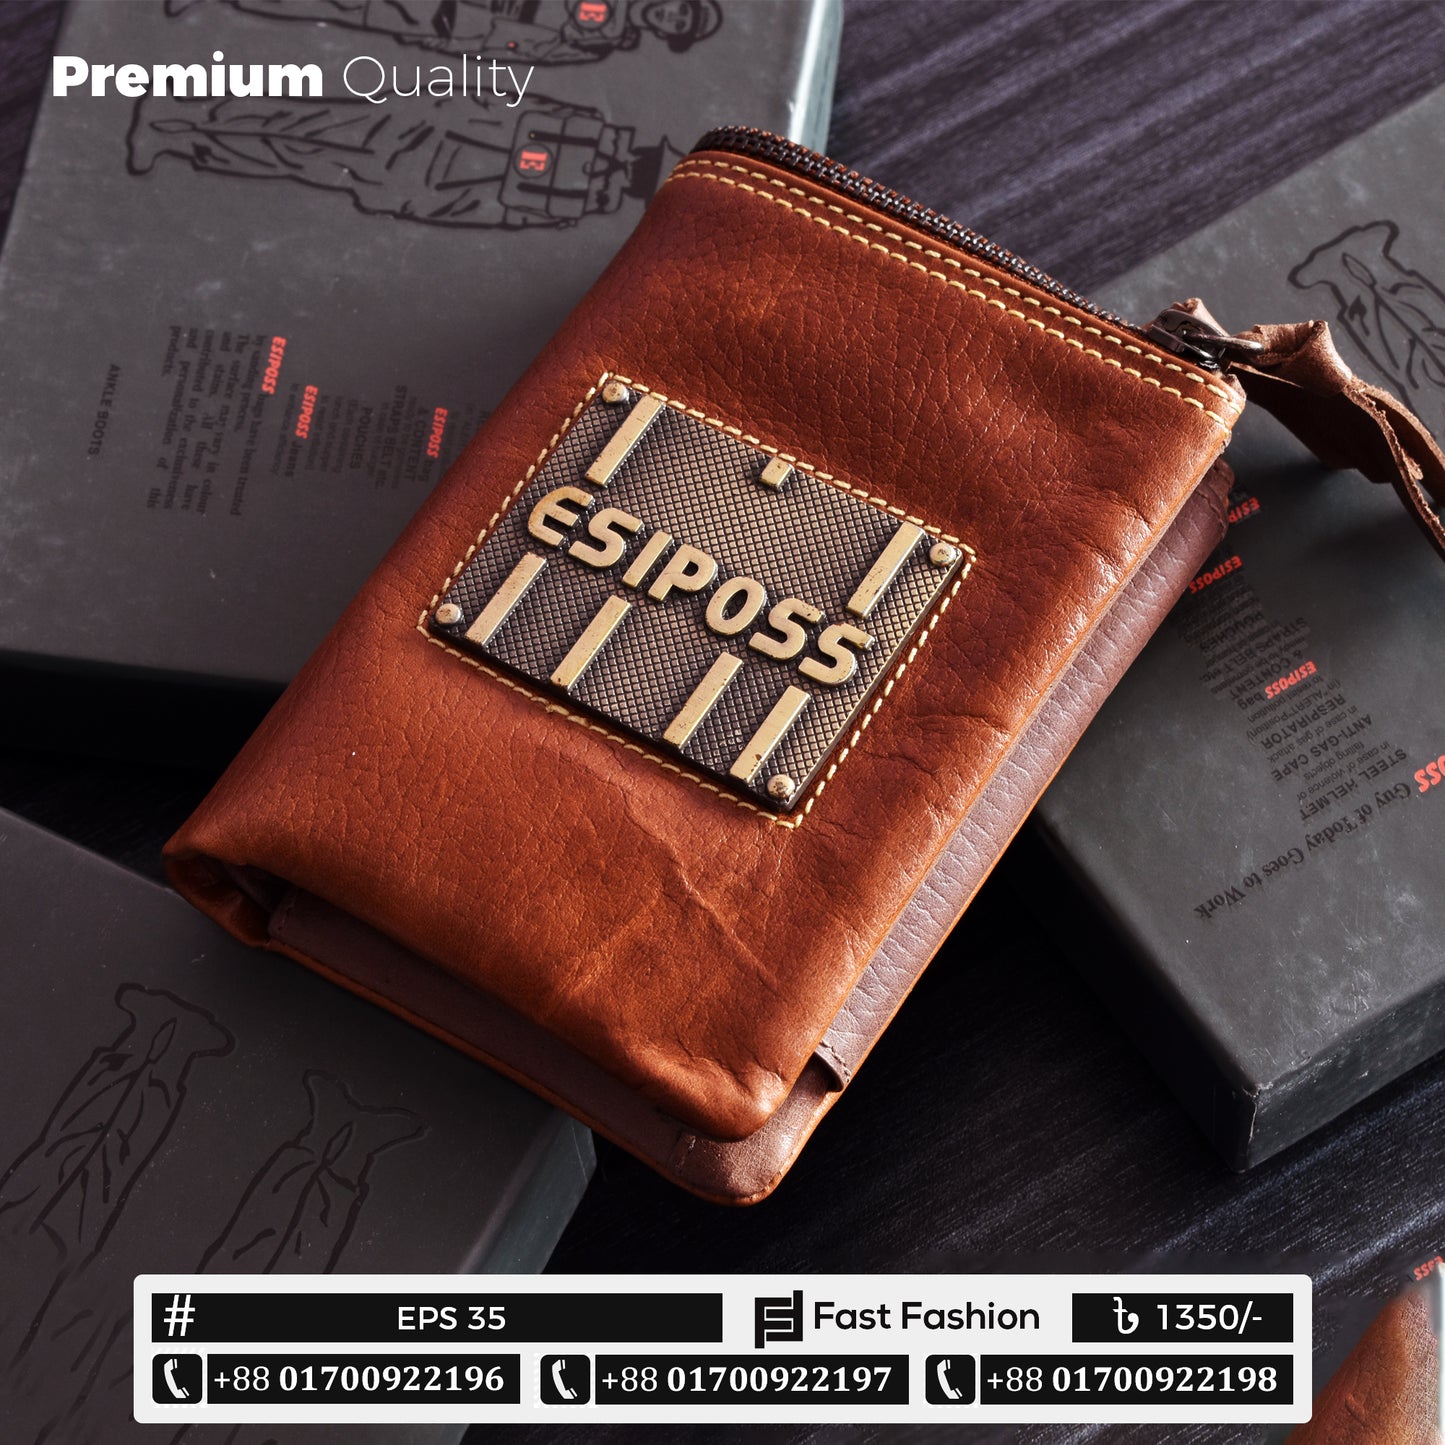 Original Esiposs Leather Wallet | Pocket Size Wallet | EPS 35